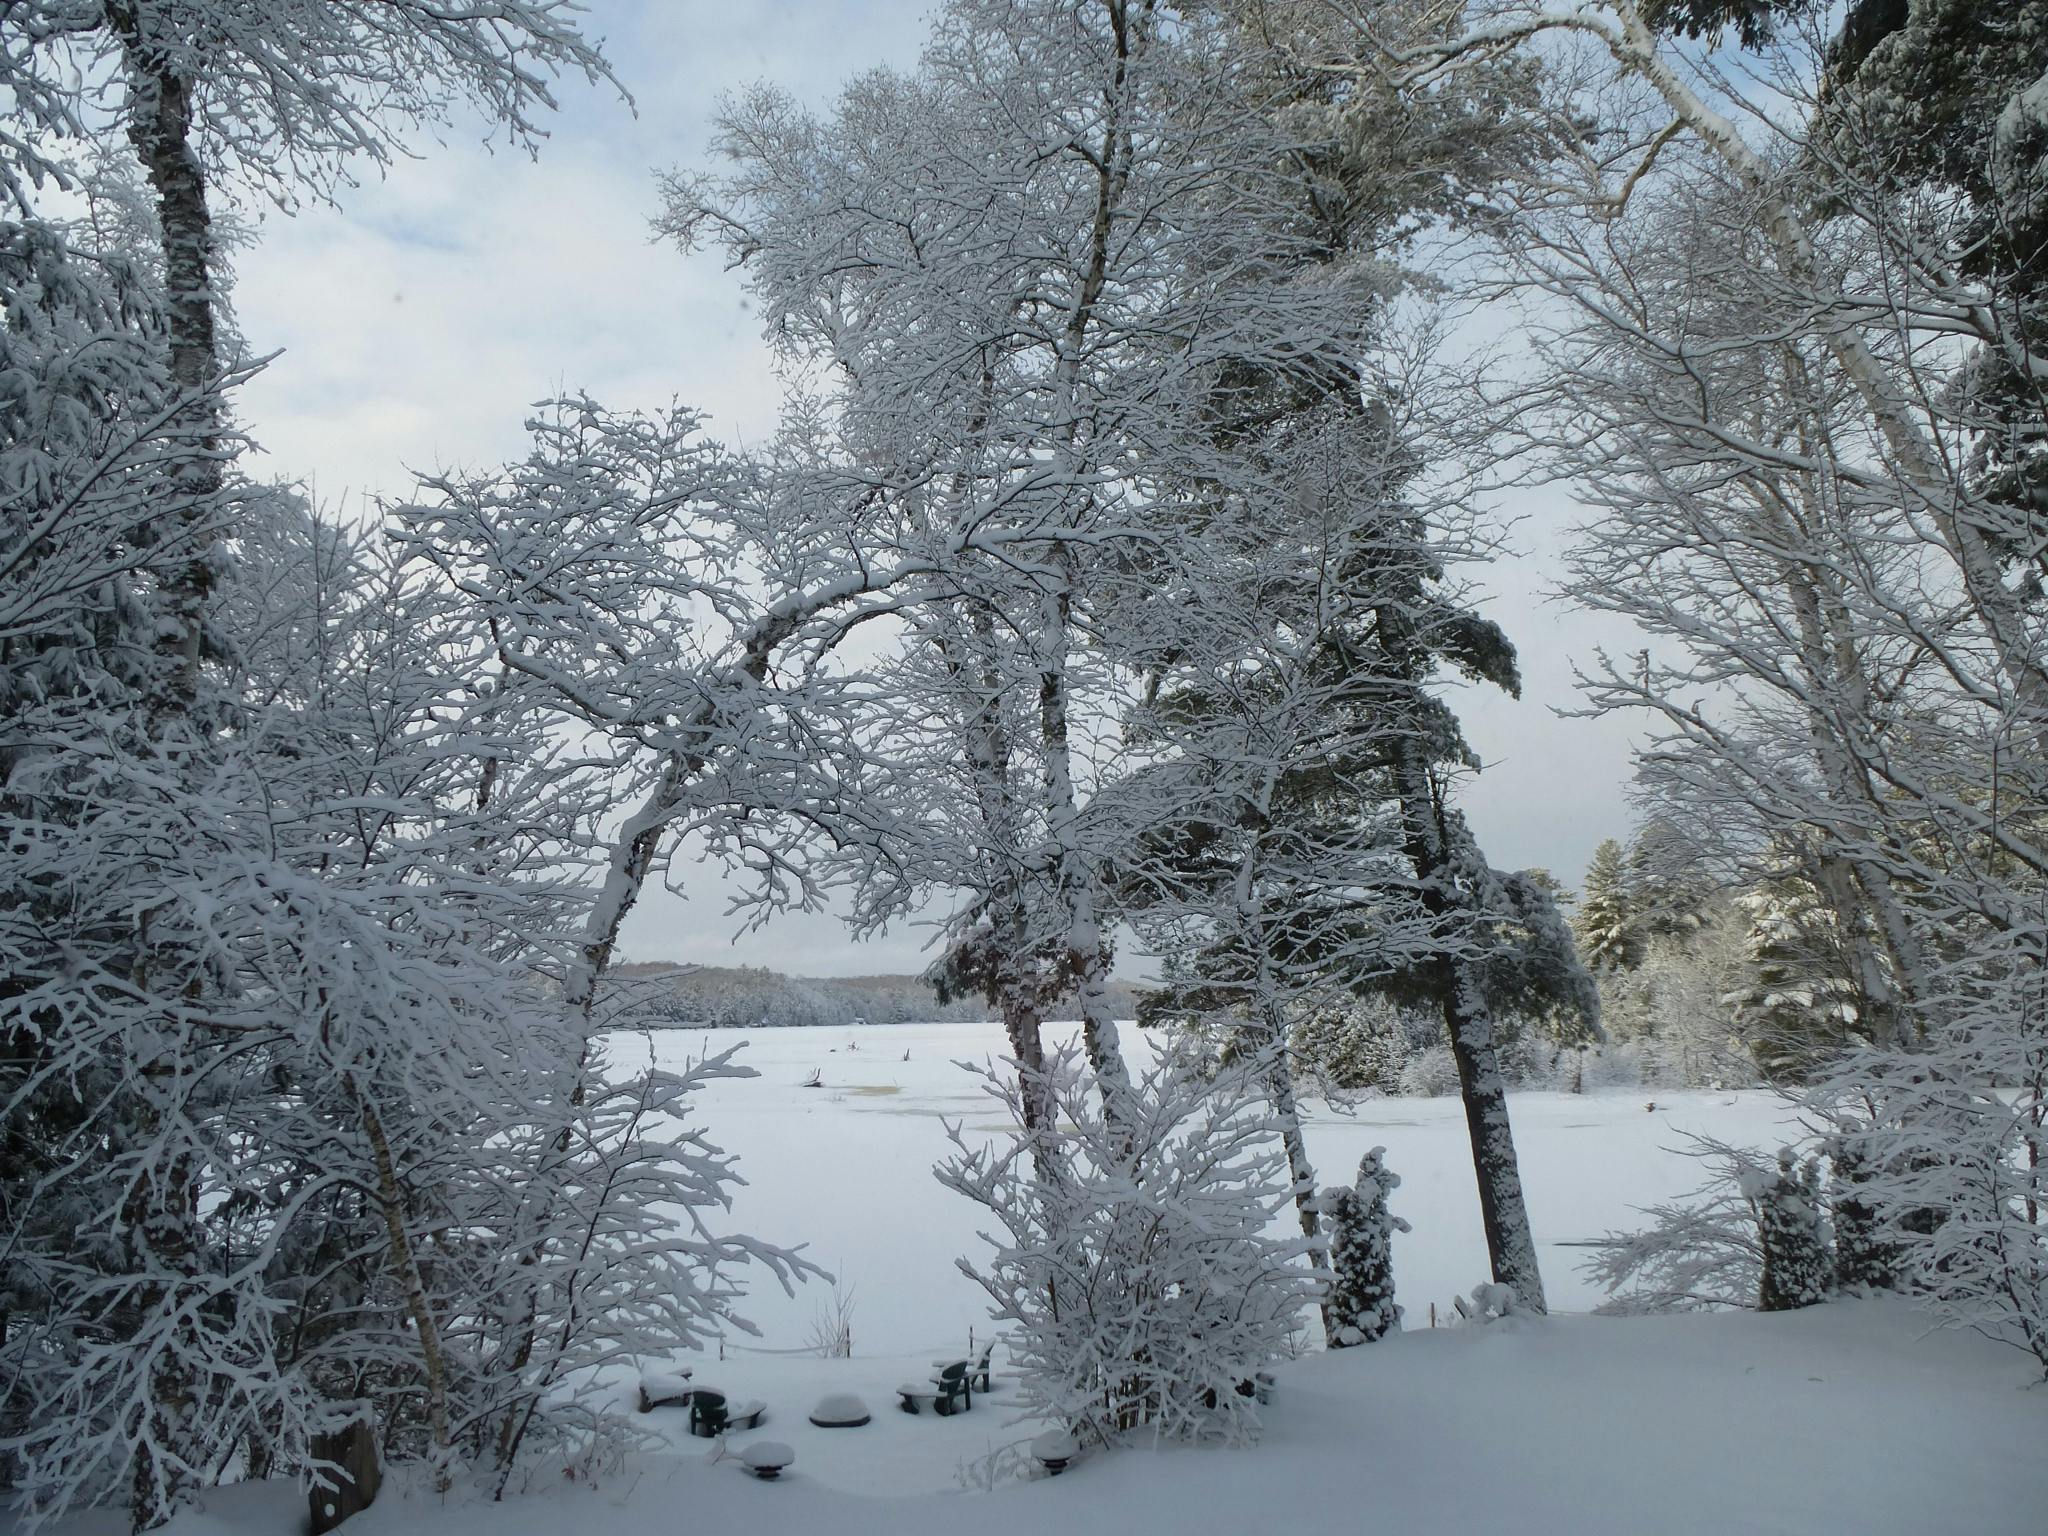 Free stock photo of Heavy snow on trees. winter snow, Snow coating trees